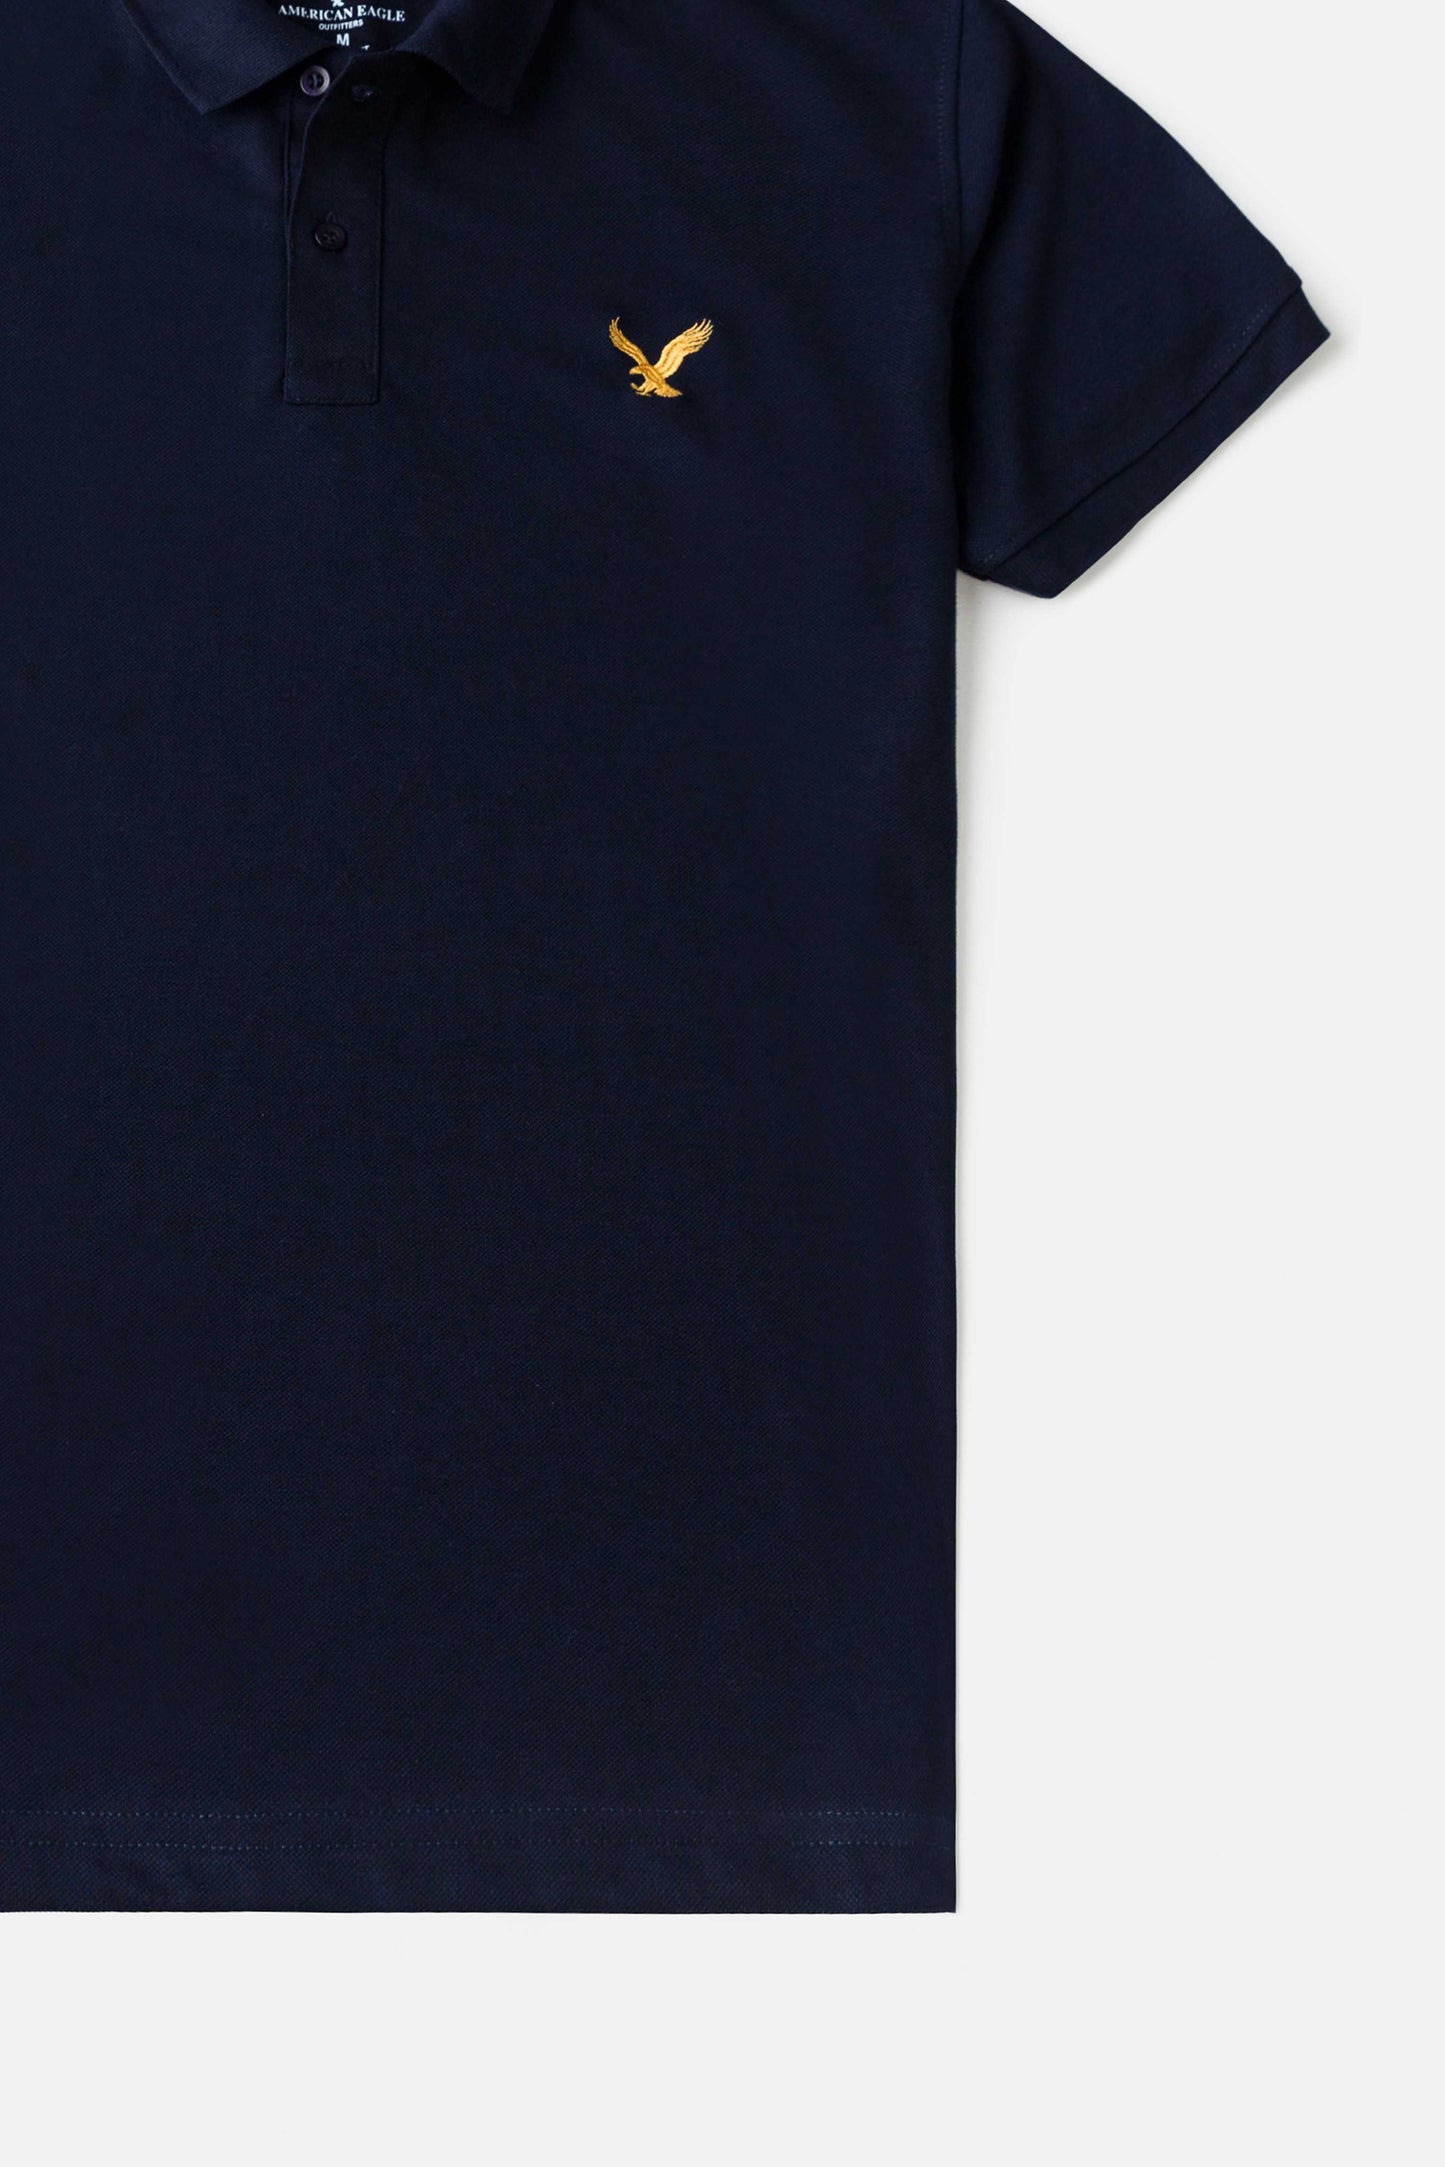 AE Imported Pique Polo shirt – Navy Blue